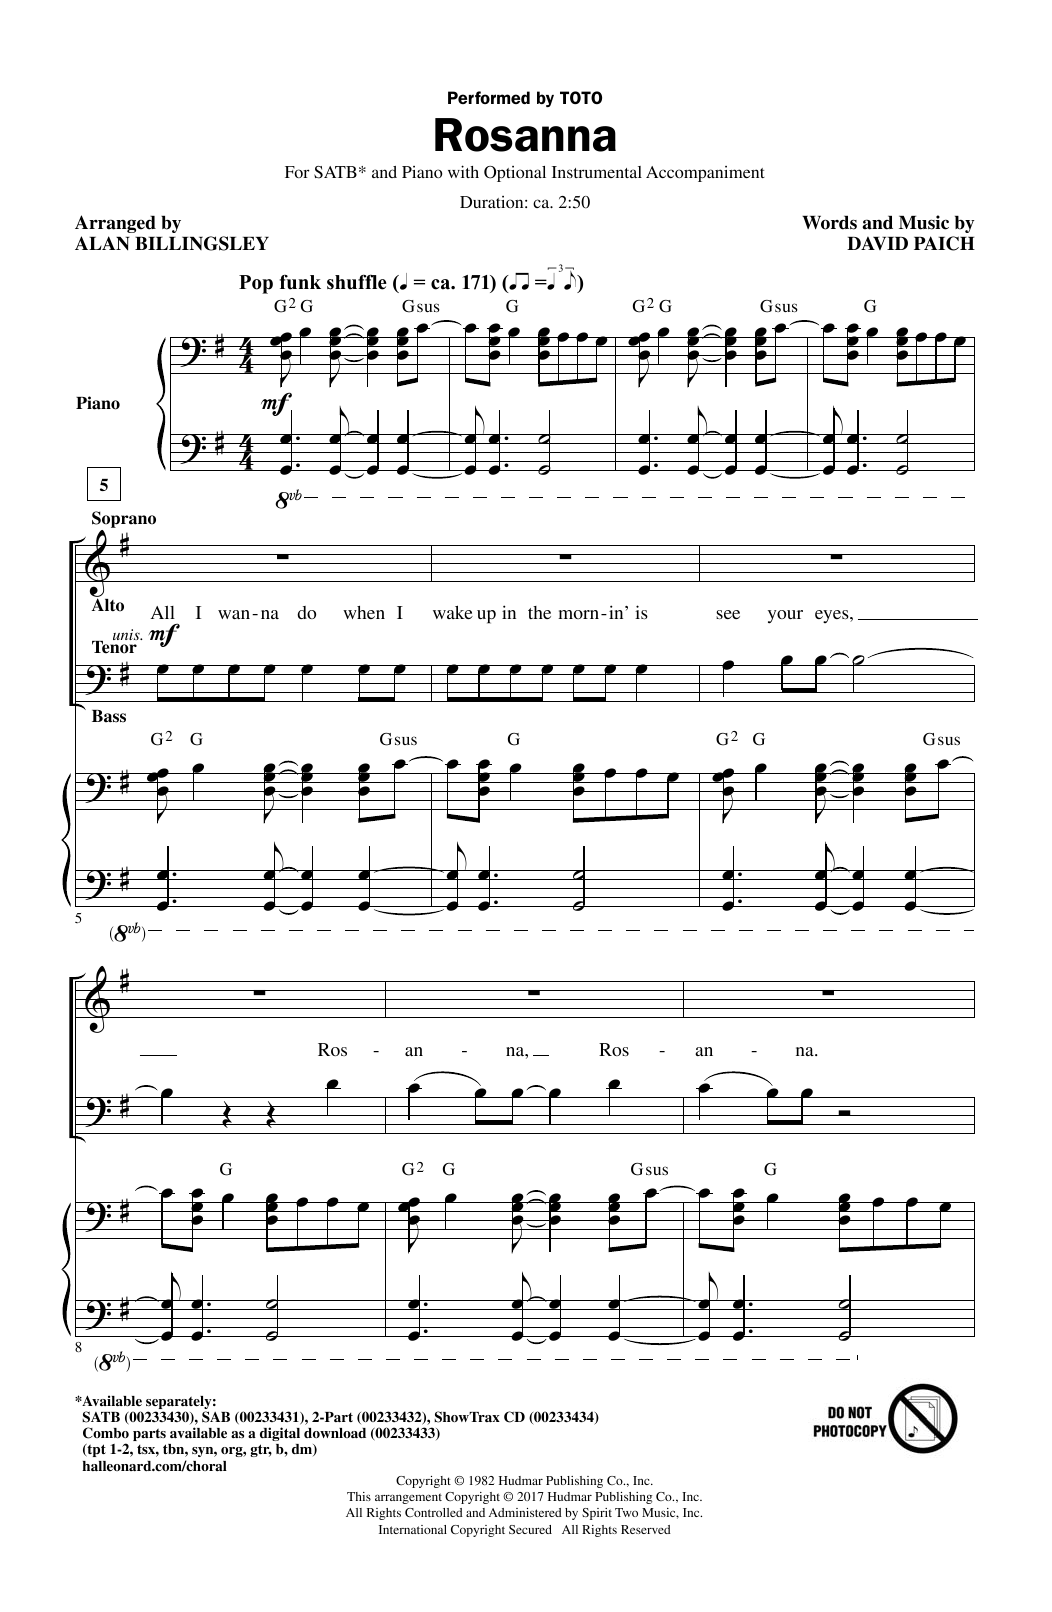 Toto Rosanna (arr. Alan Billingsley) Sheet Music Notes & Chords for 2-Part Choir - Download or Print PDF